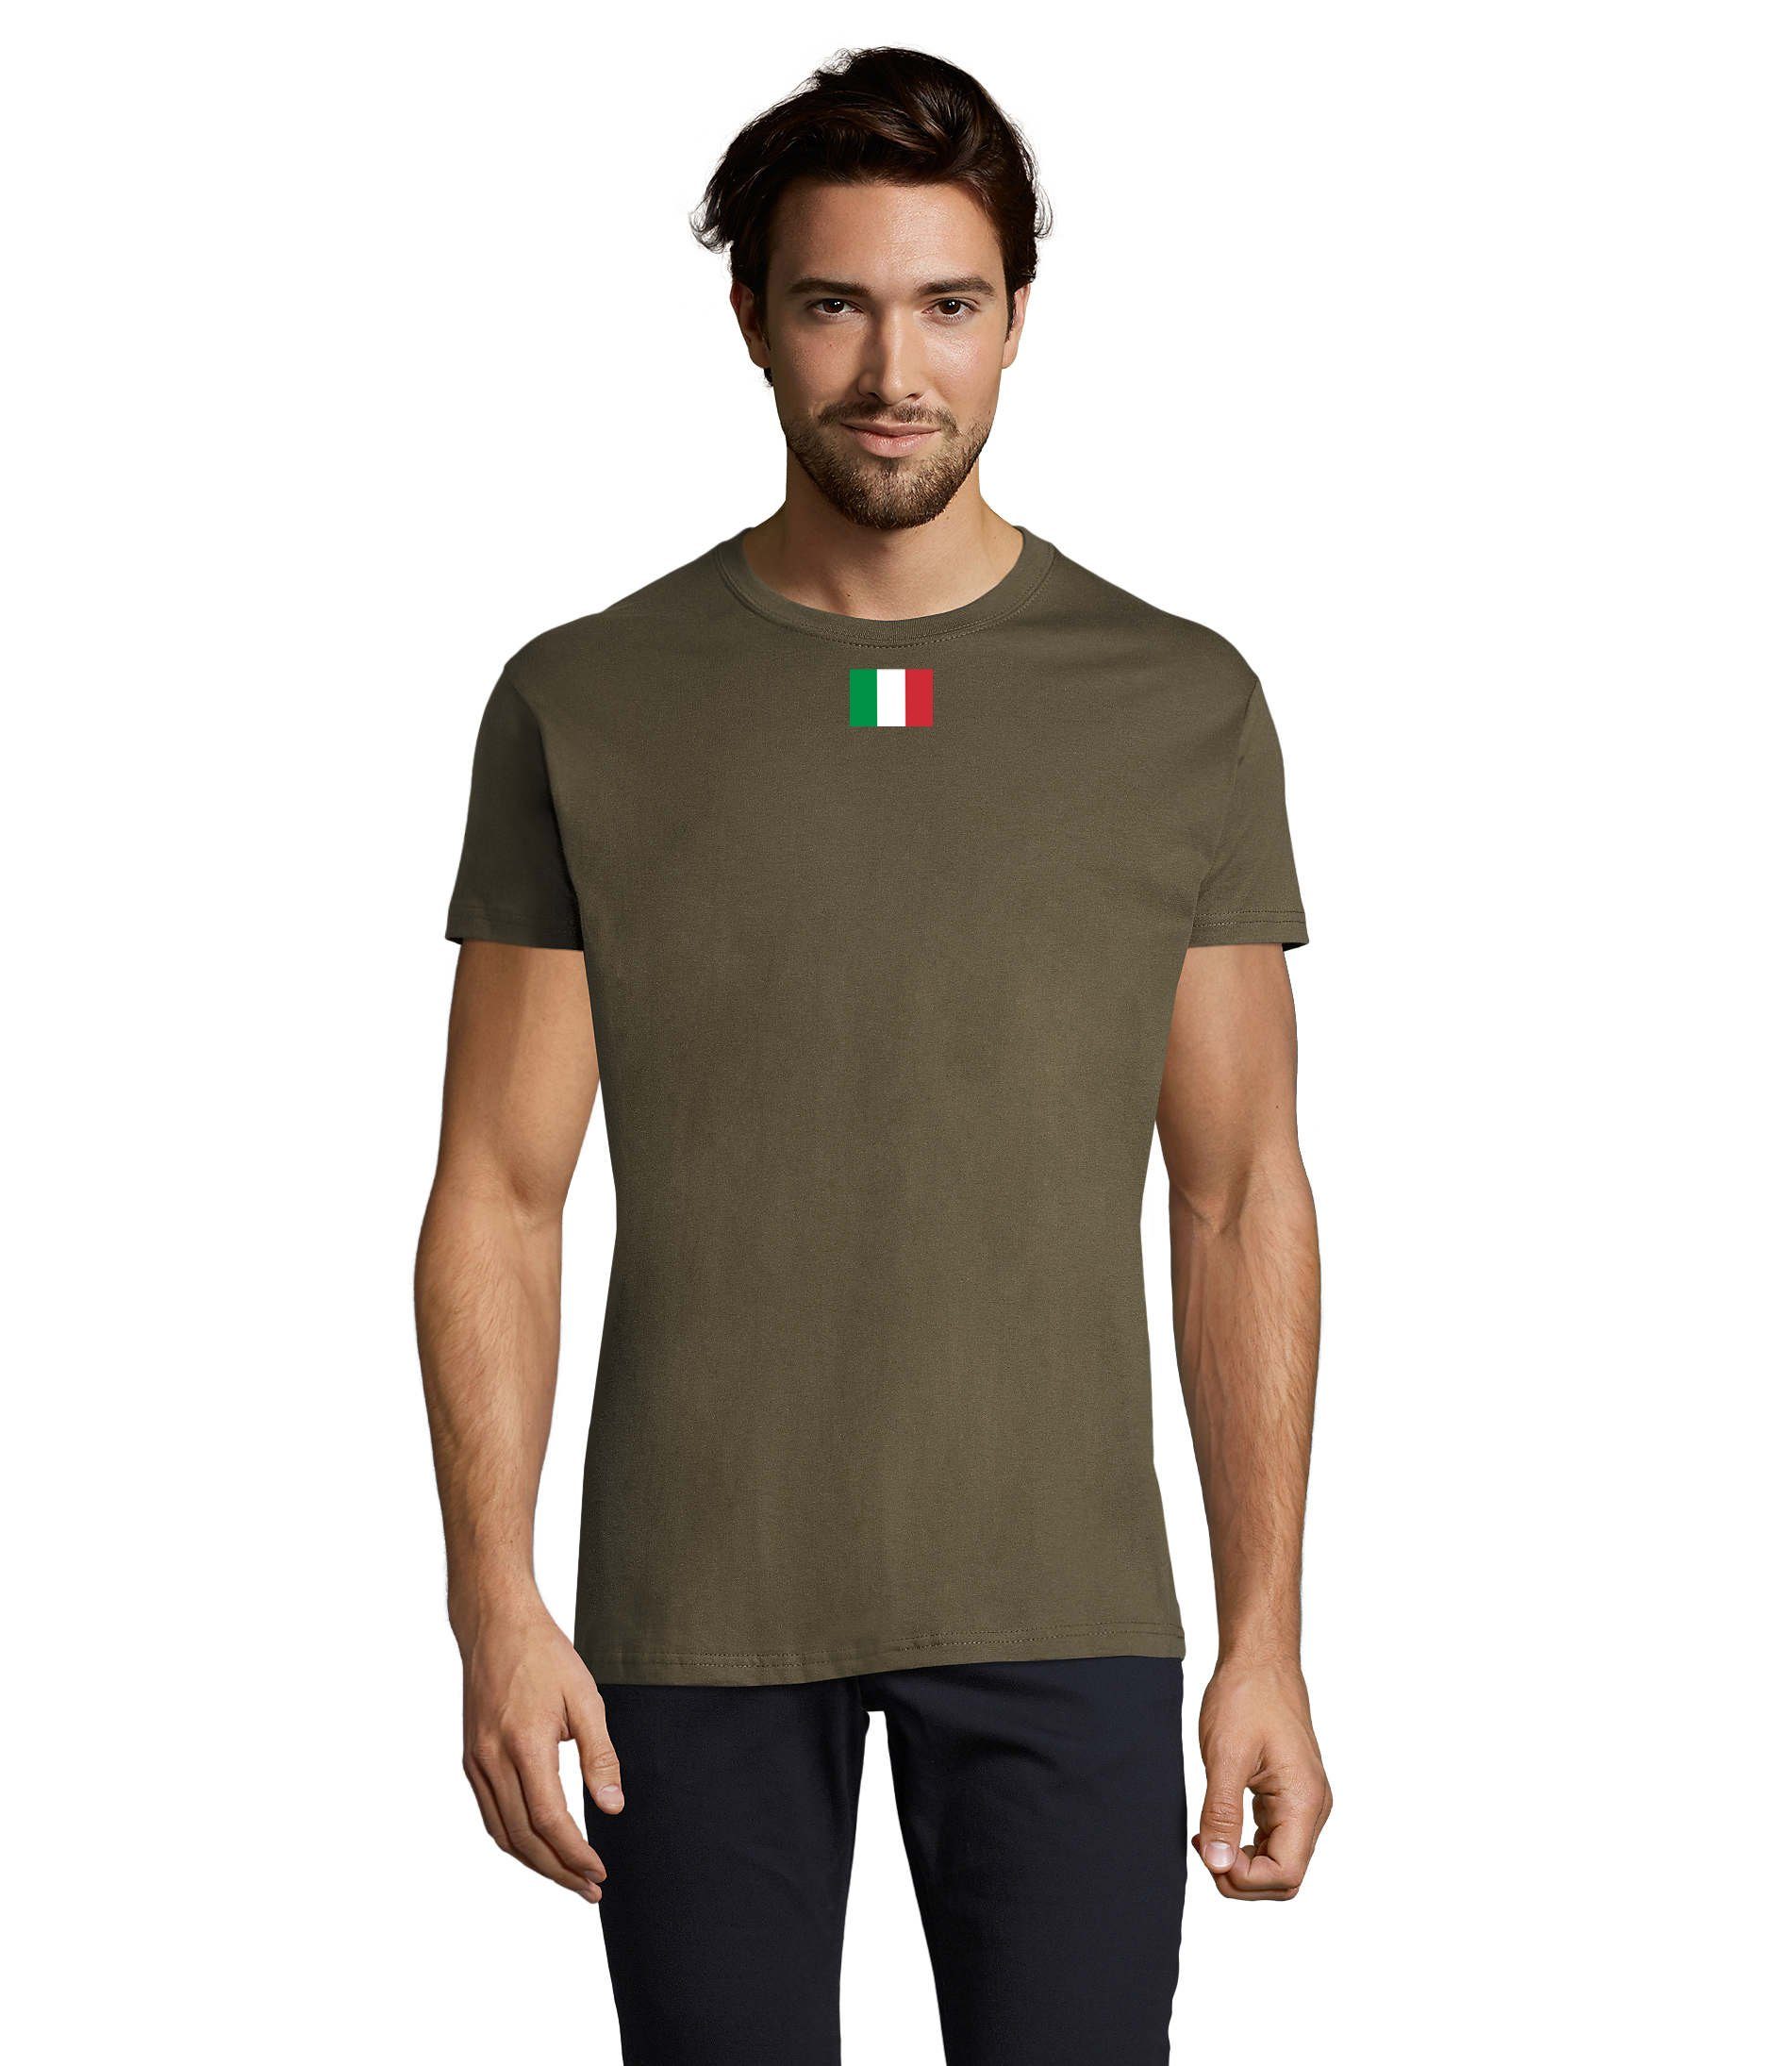 Blondie & Brownie T-Shirt Herren Italien Ukraine USA Army Armee Nato Peace Air Force